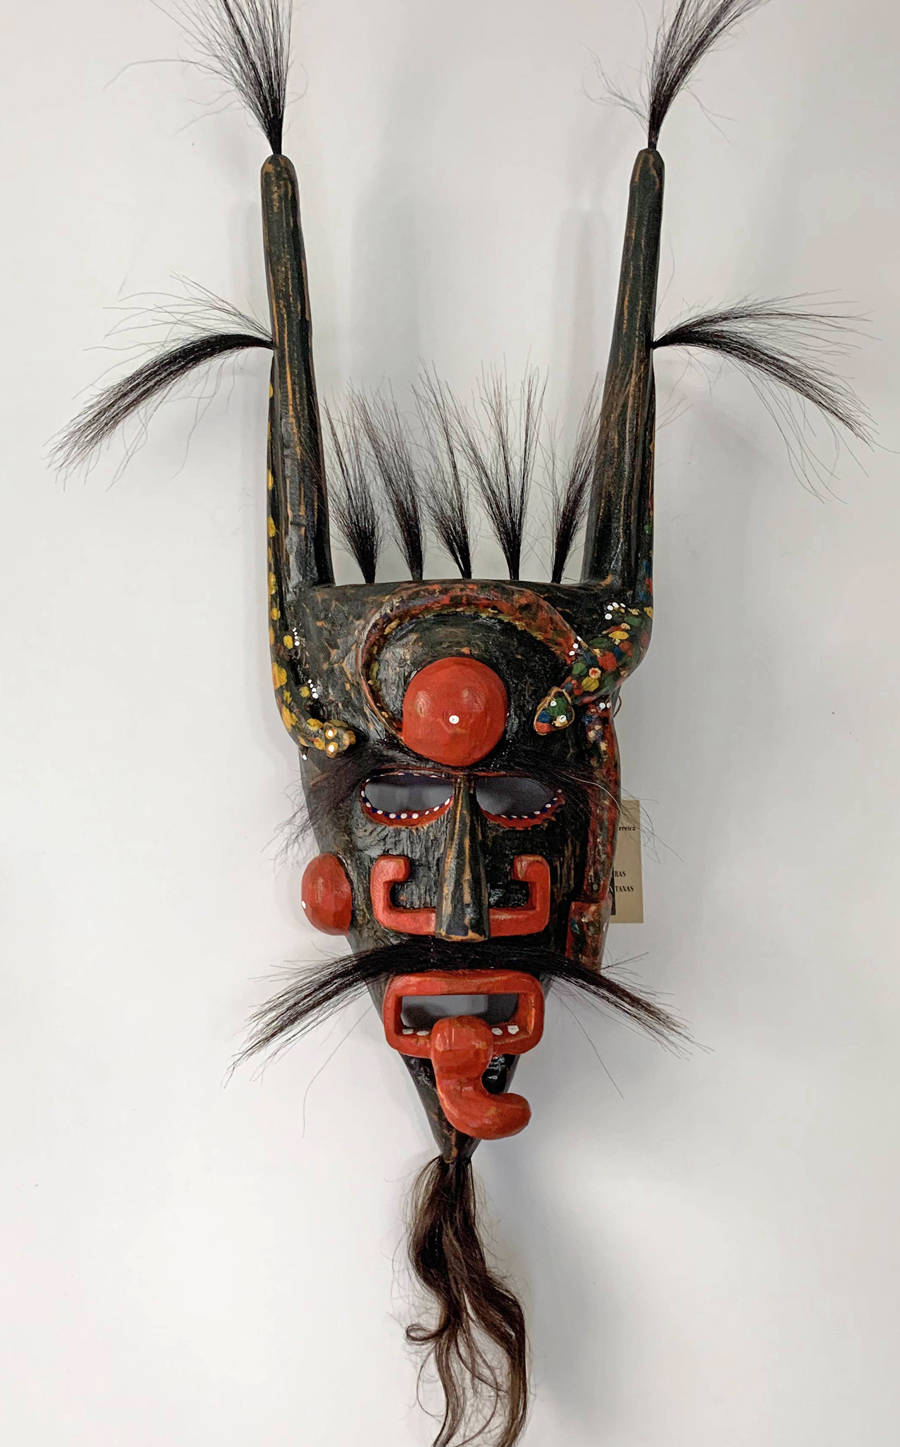 Chocalheiro Mask from Portugal